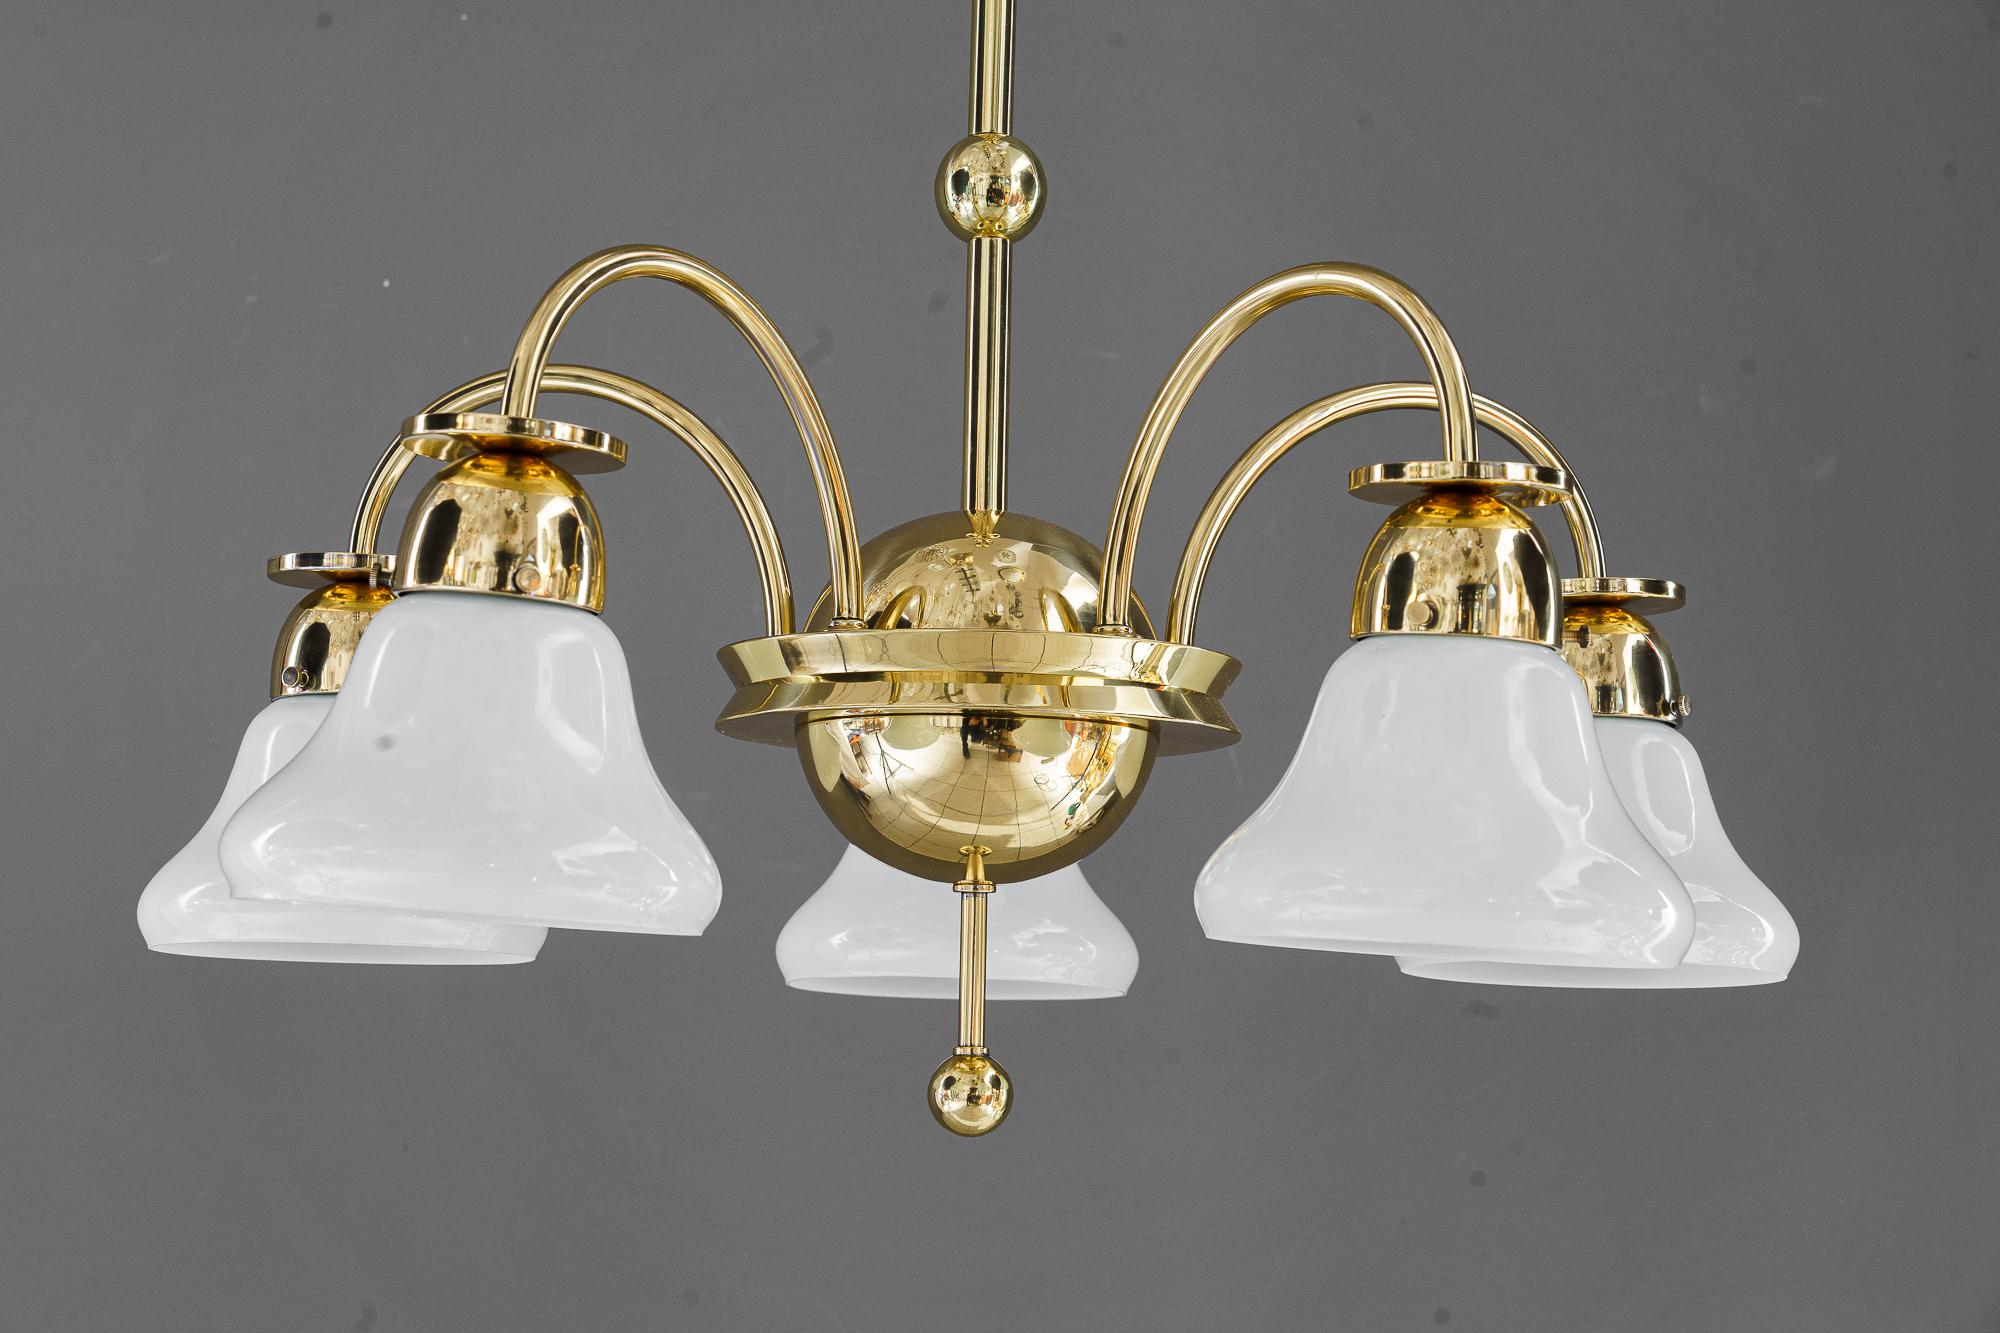 Art Deco chandelier vienna aroumd 1920s In Good Condition For Sale In Wien, AT